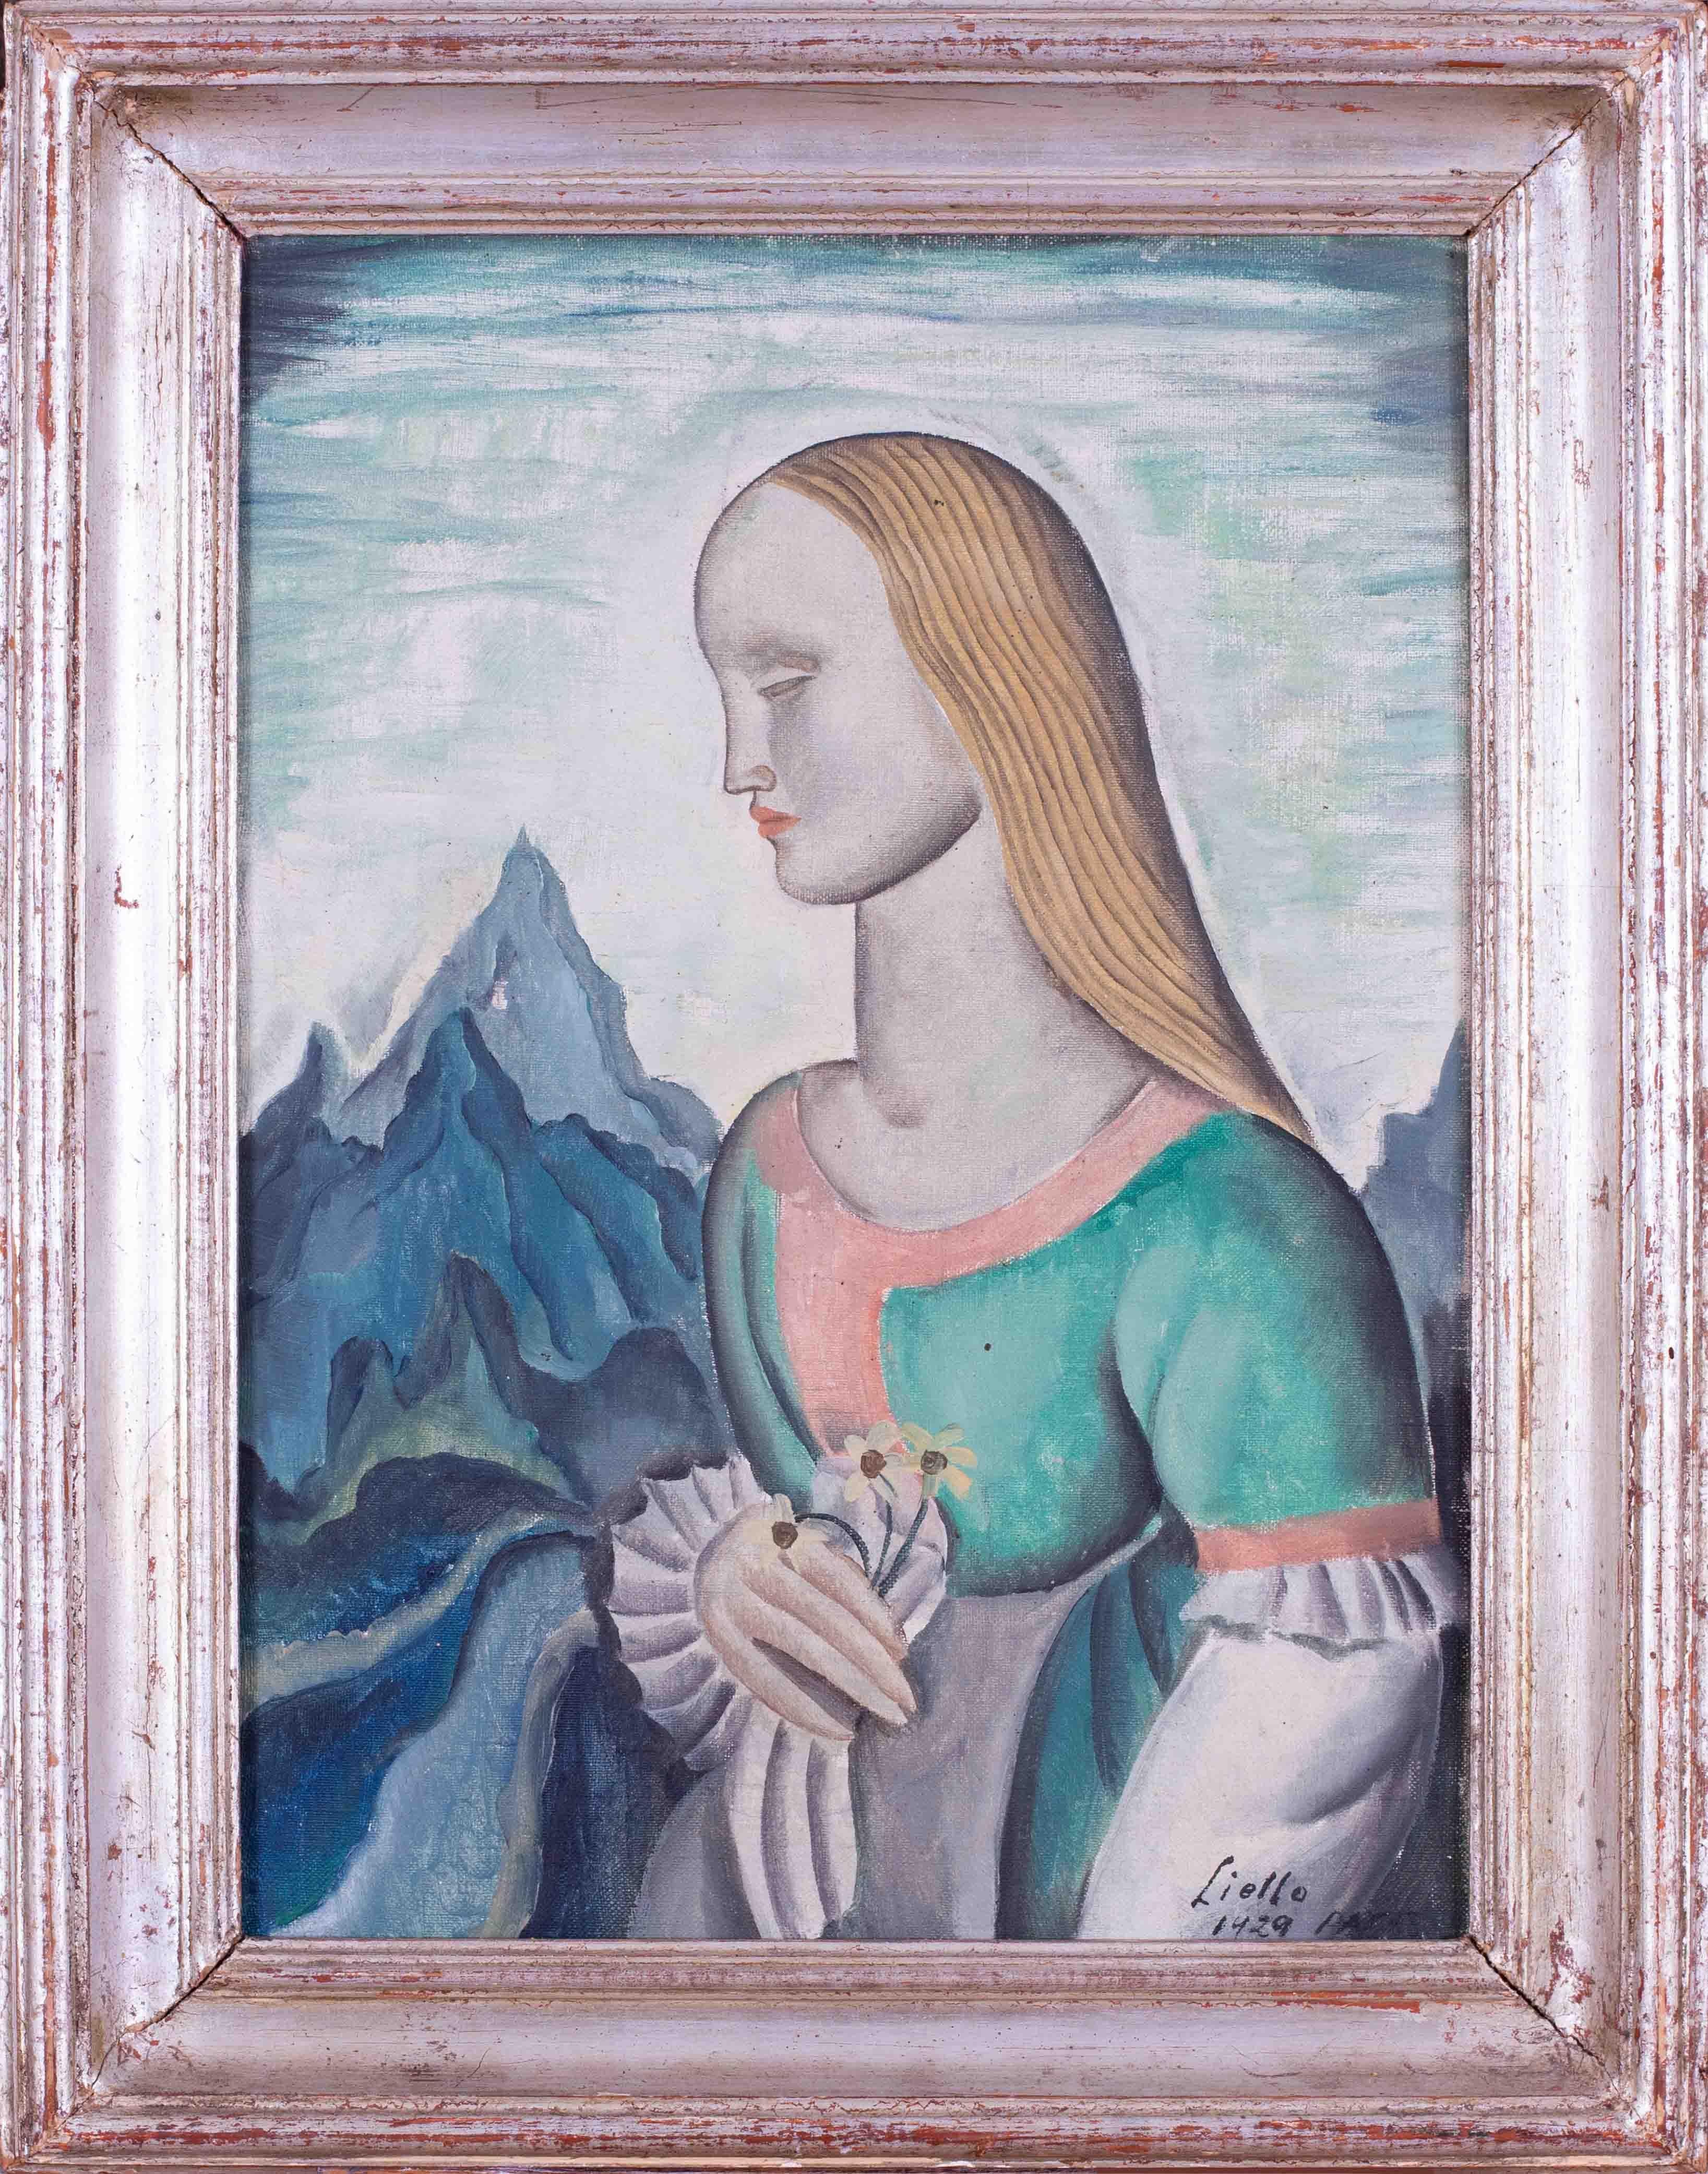 Giuseppe (John) Liello Figurative Painting - 1929 art deco Oil painting of a lady by Italian / American artist Liello